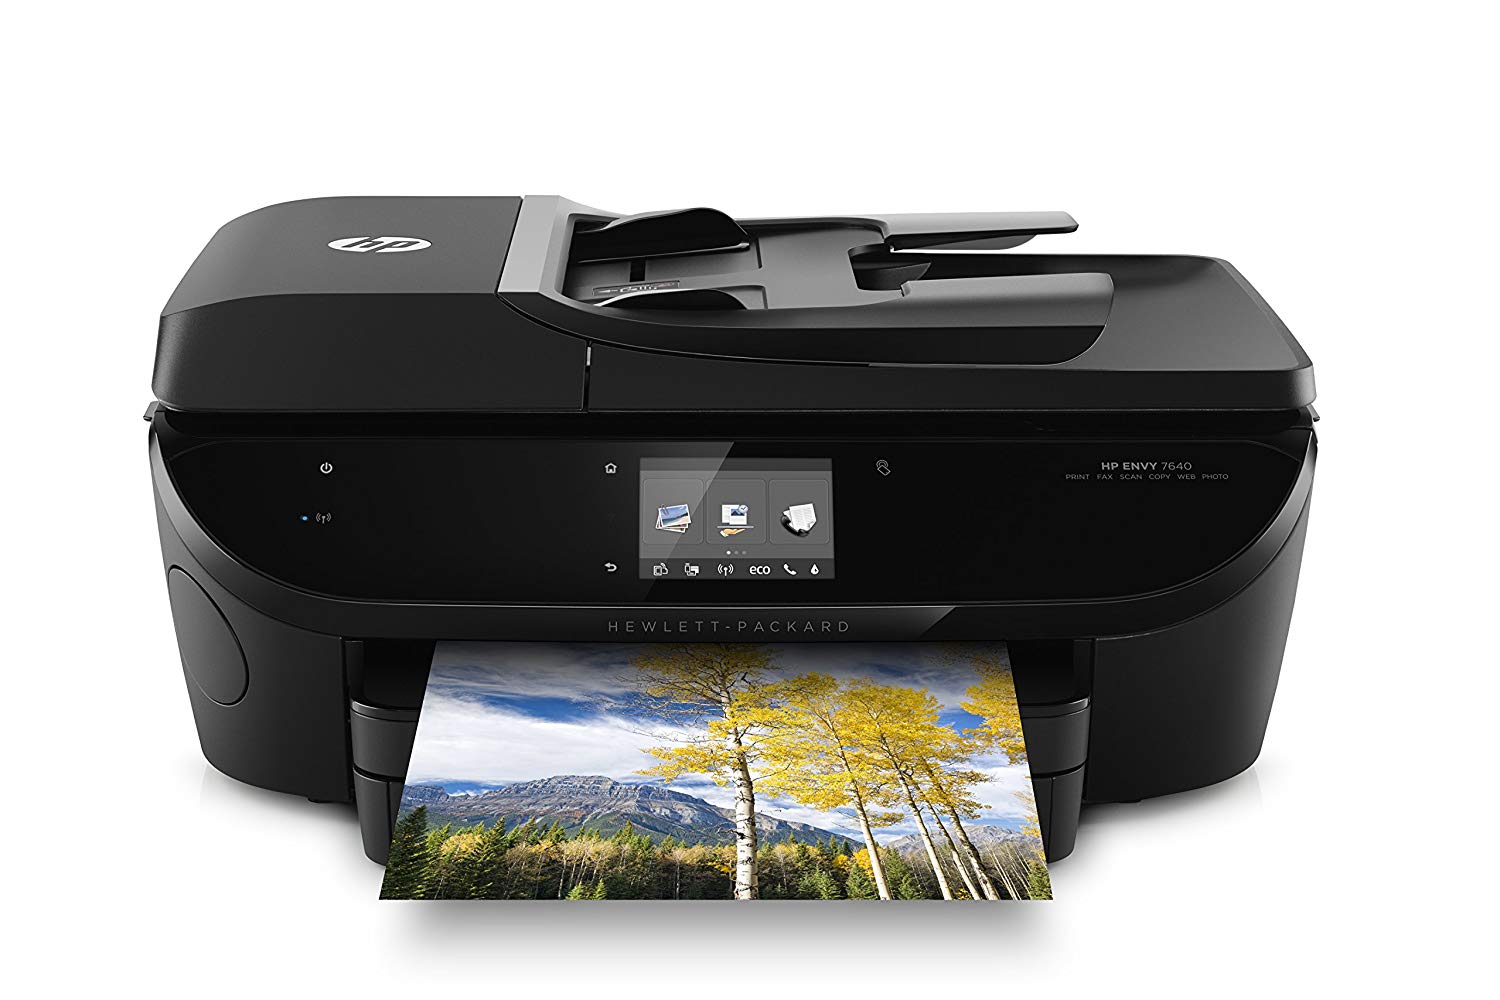 HP ENVY 7640 Printer Price, Specs, Review